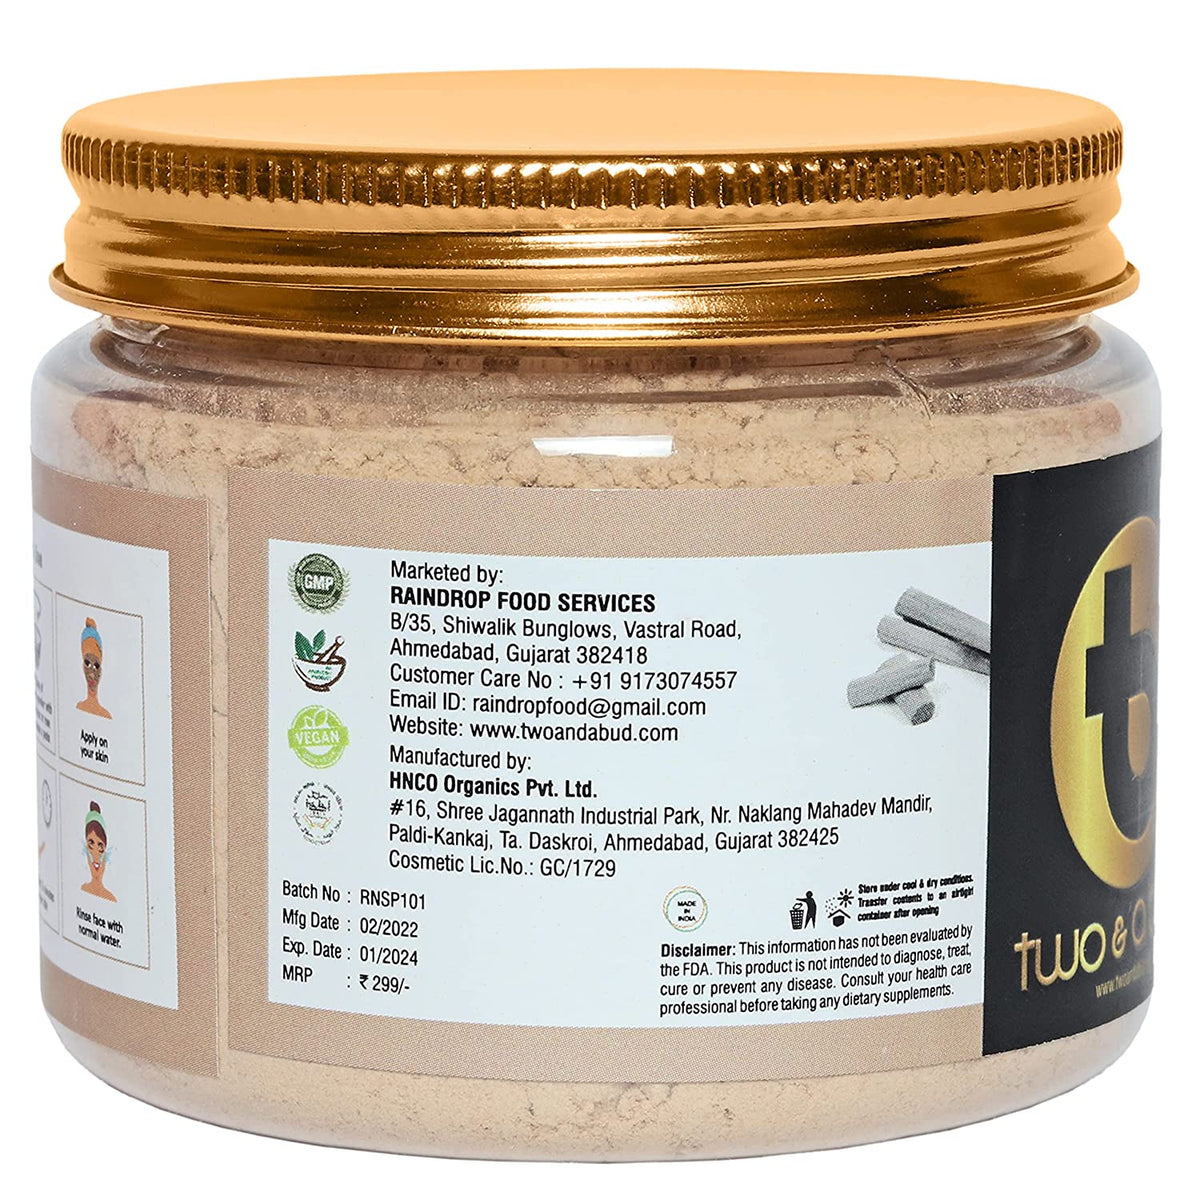 100% Natural Sandalwood Powder 80 g